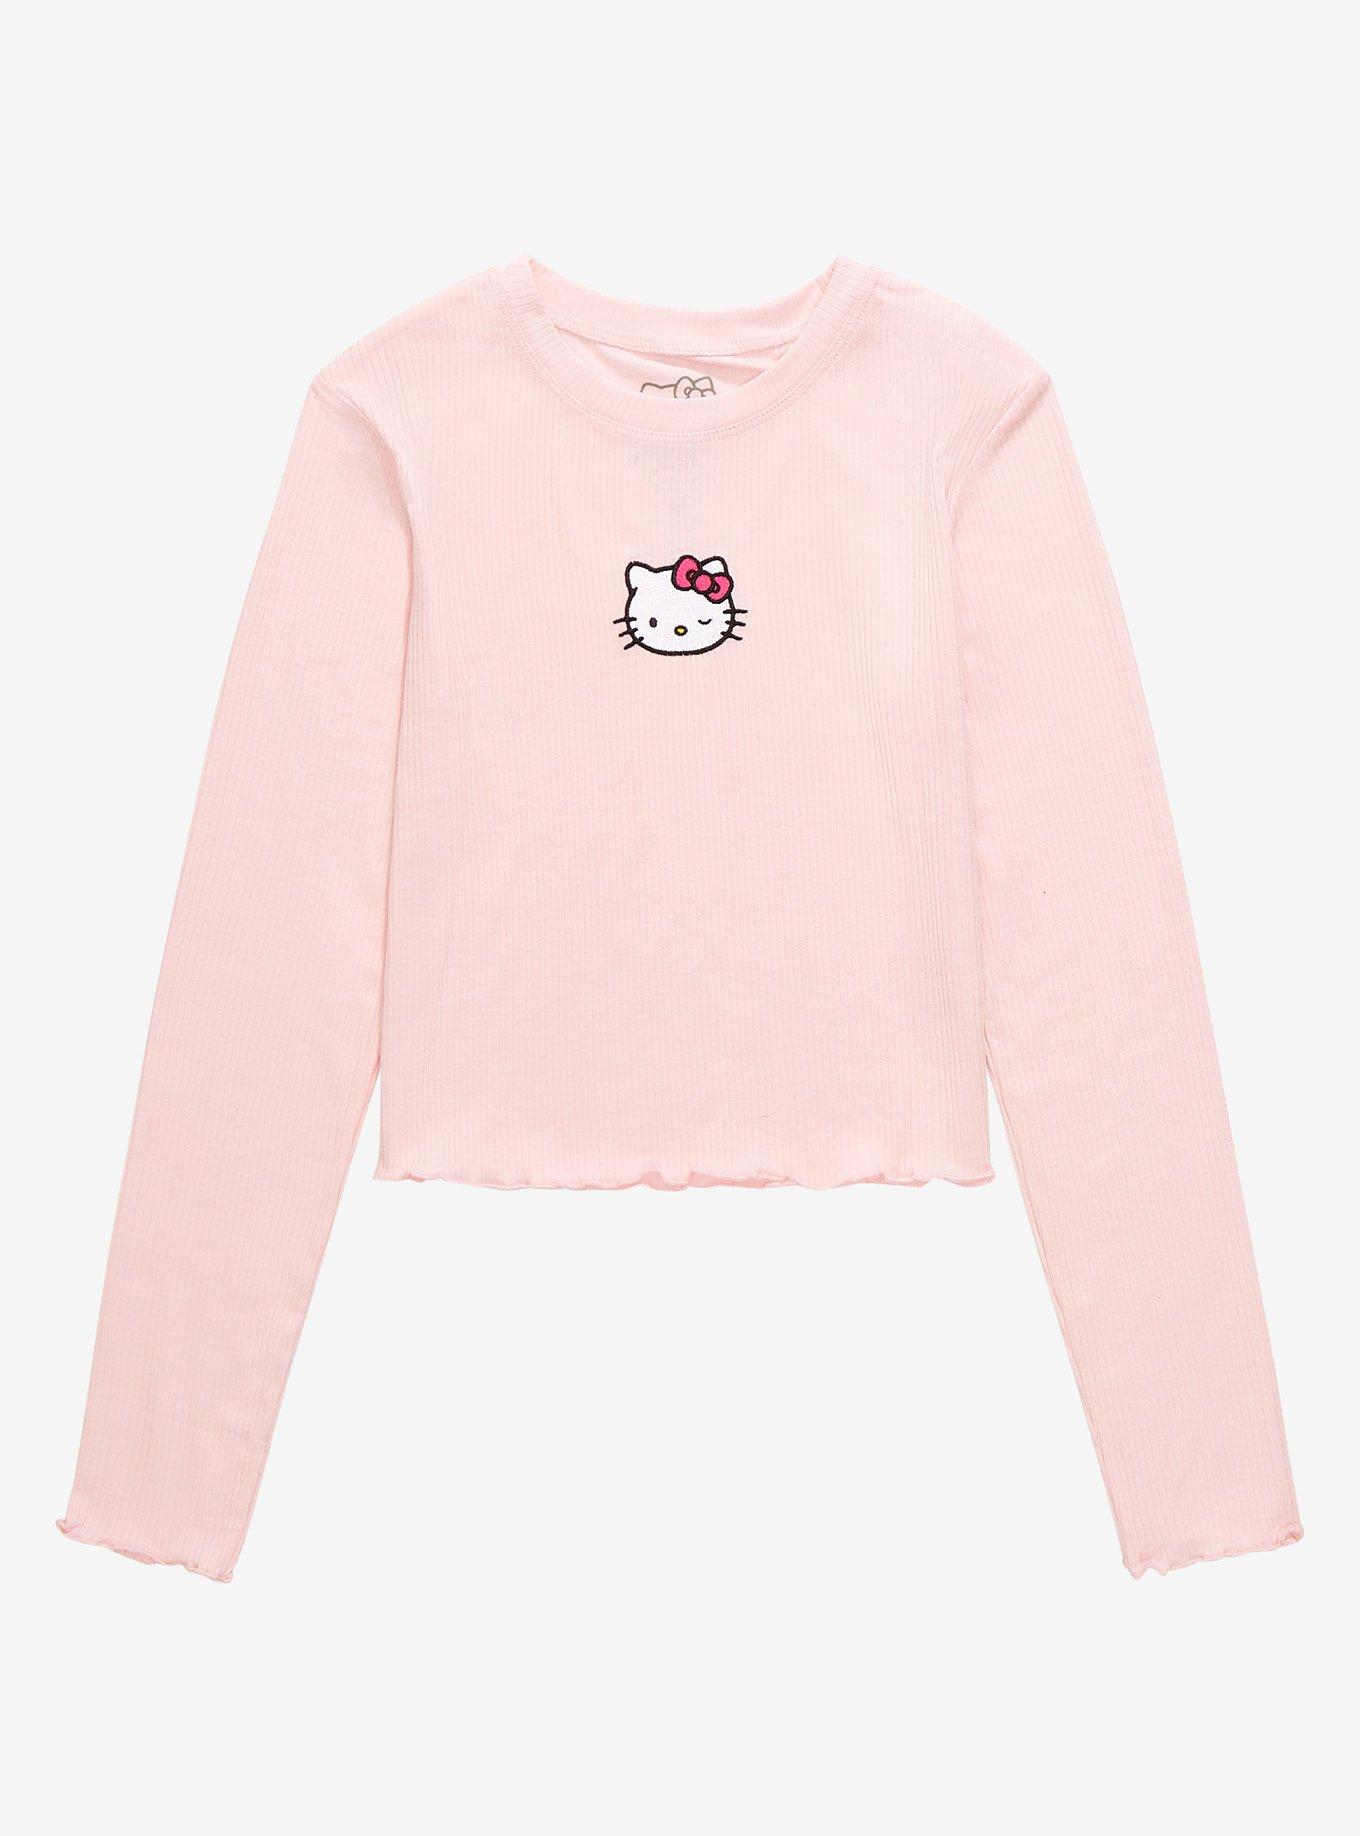 Hello Kitty ©Sanrio T-shirt - T-shirts - CLOTHING - Woman 